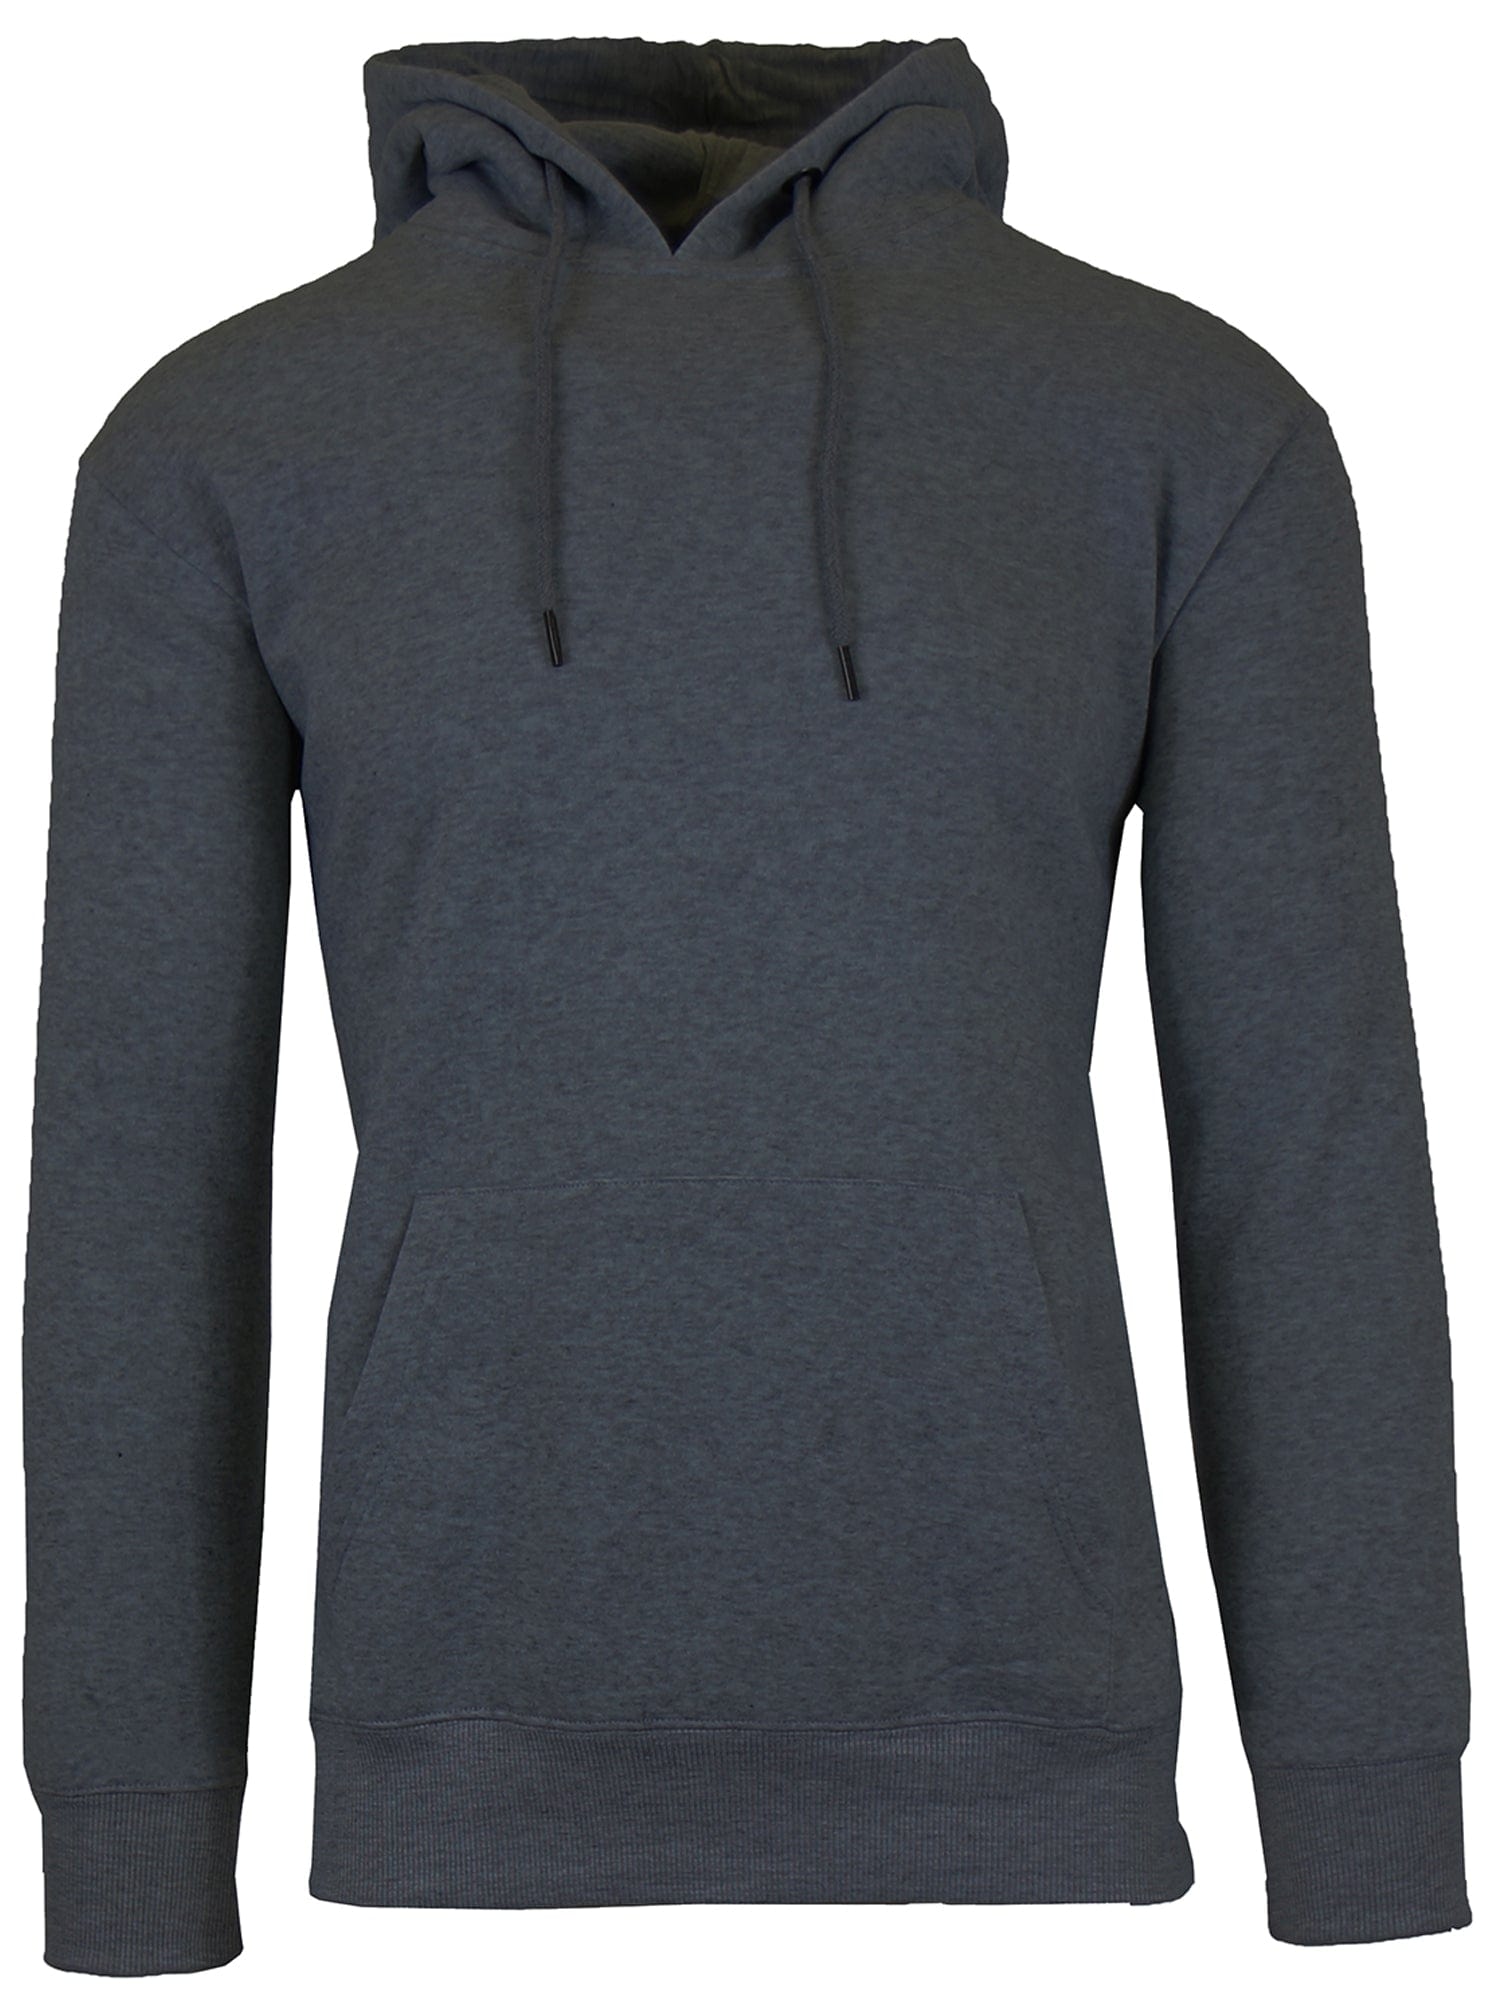 Pullover Fleece-Lined Sweatshirt Hoodie - GalaxybyHarvic